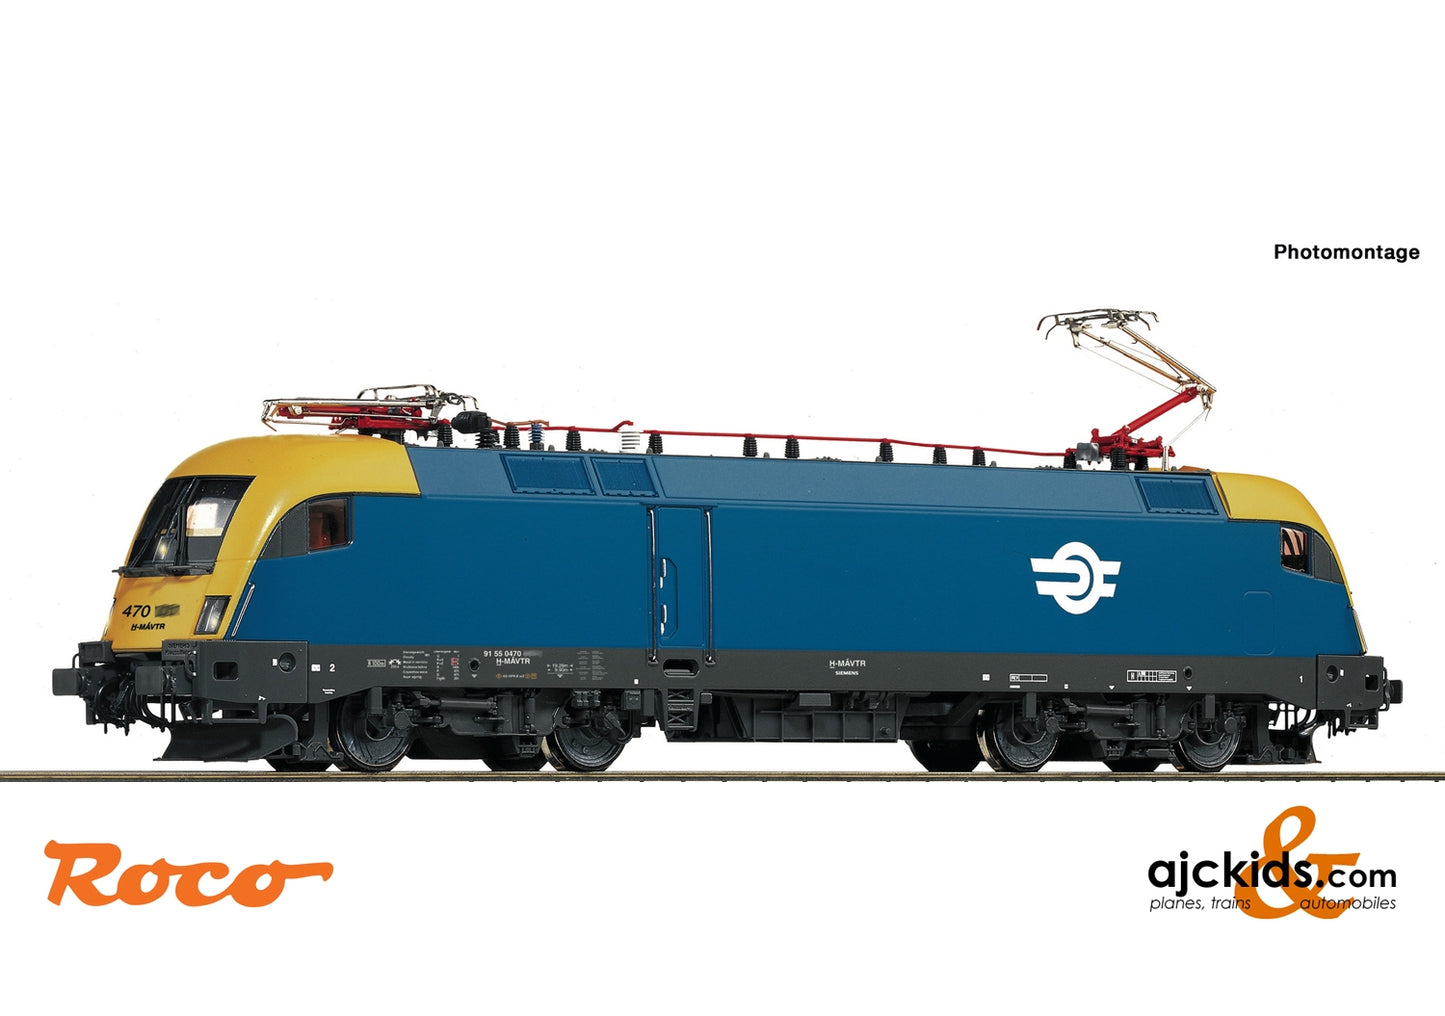 Roco 73522 - Electric locomotive class 470